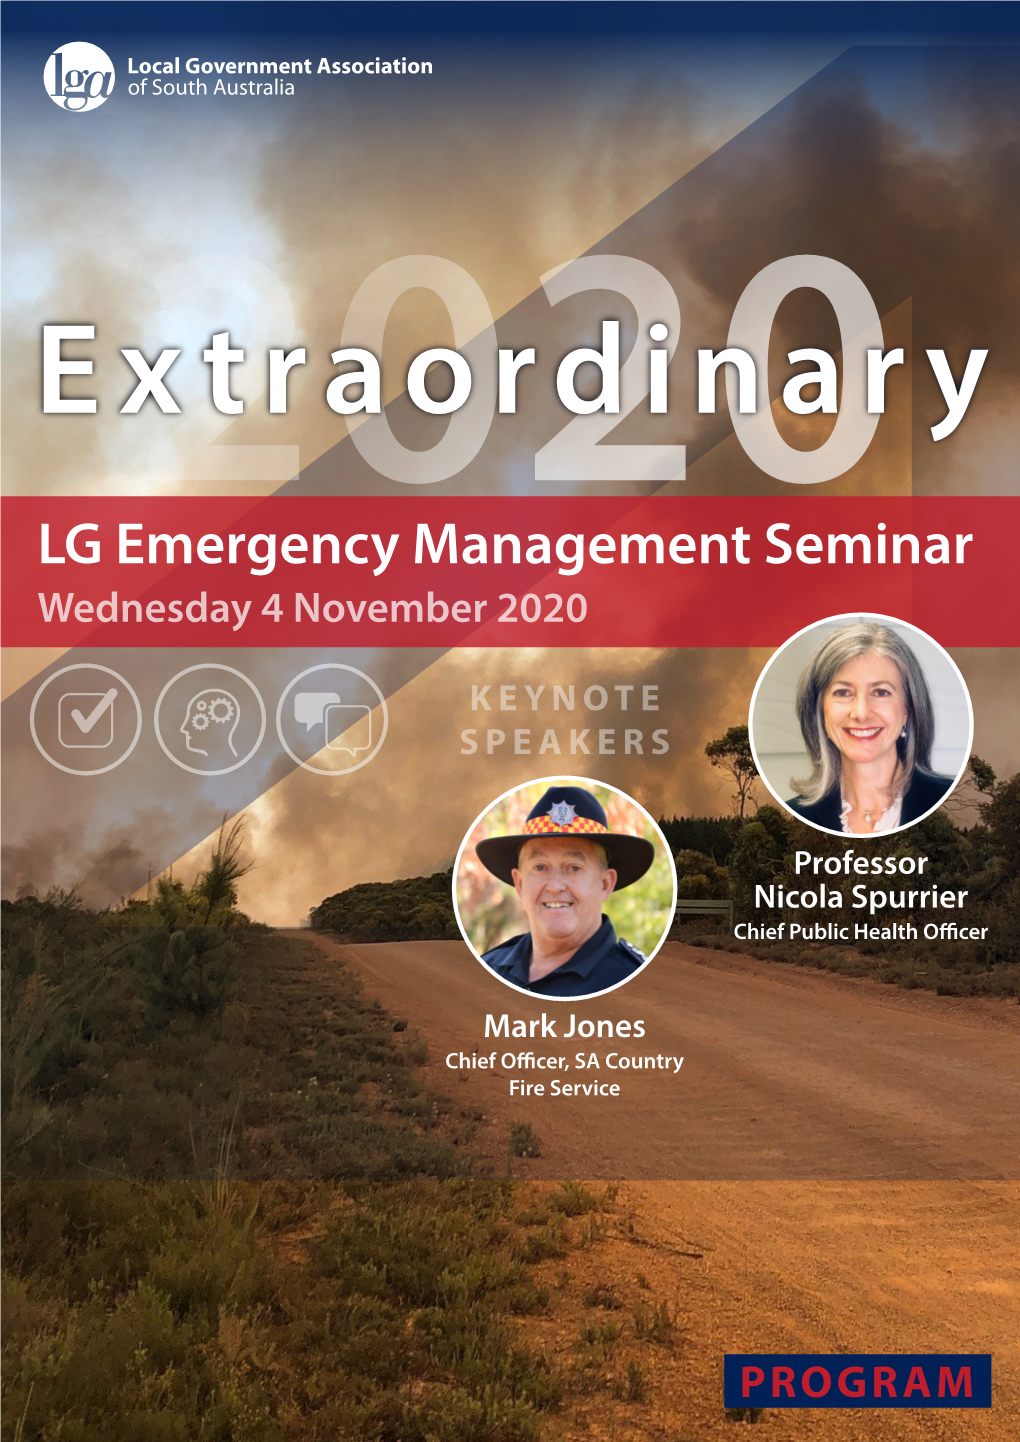 LG Emergency Management Seminar Wednesday 4 November 2020